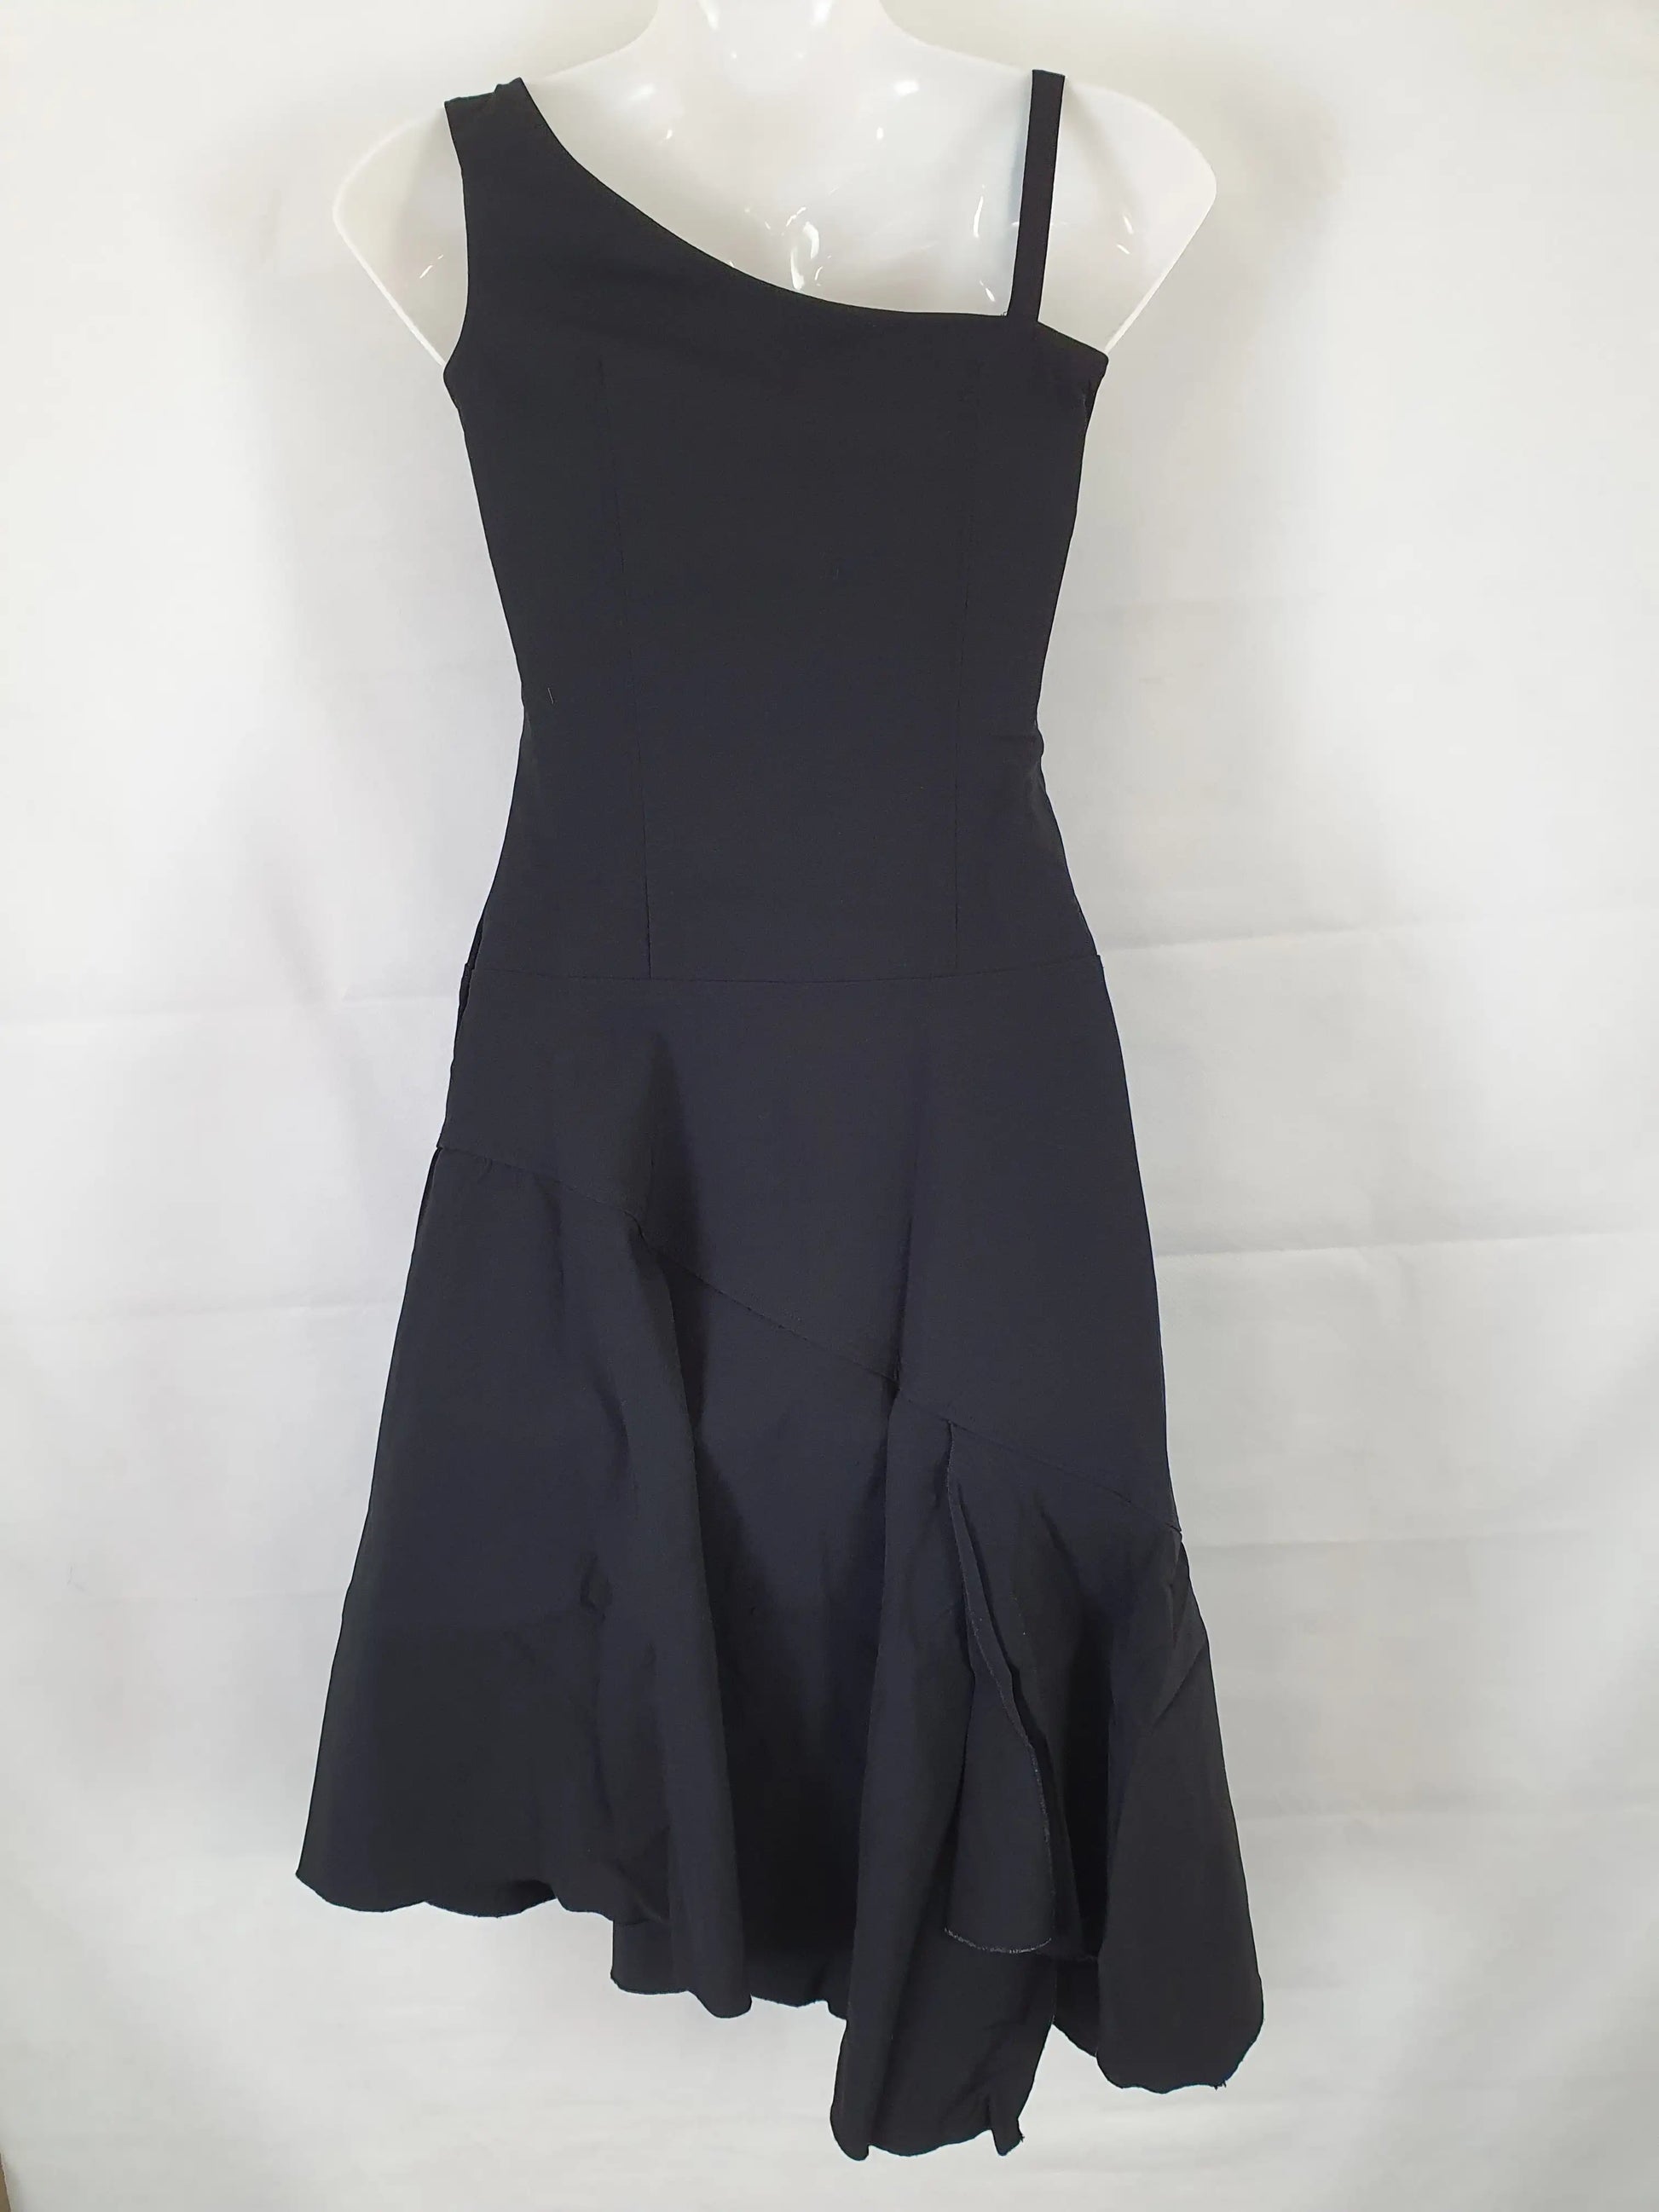 Cue Assymetric Strap Mini Dress Size 6 by SwapUp-Second Hand Shop-Thrift Store-Op Shop 